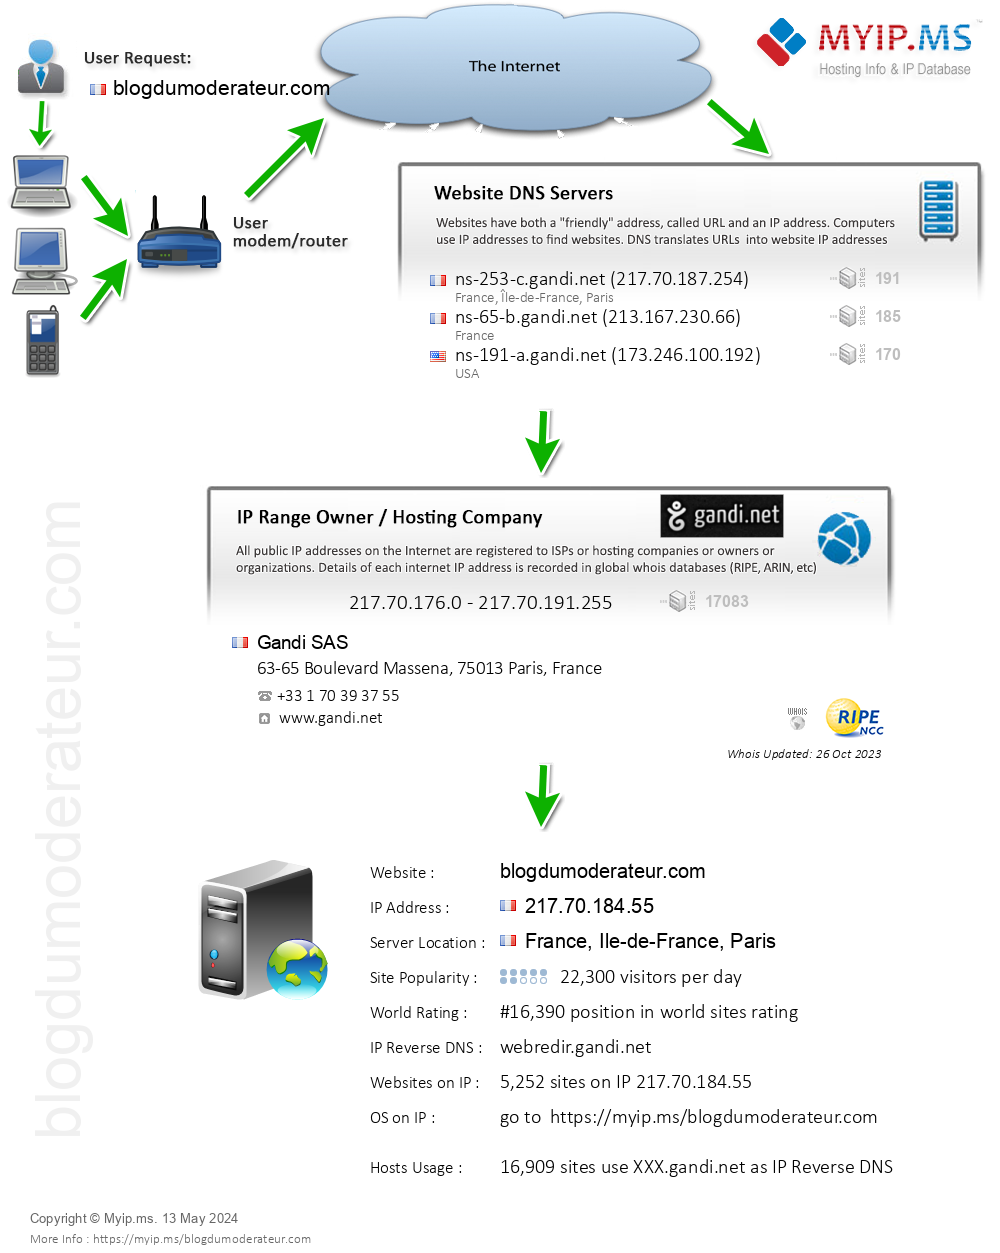 Blogdumoderateur.com - Website Hosting Visual IP Diagram